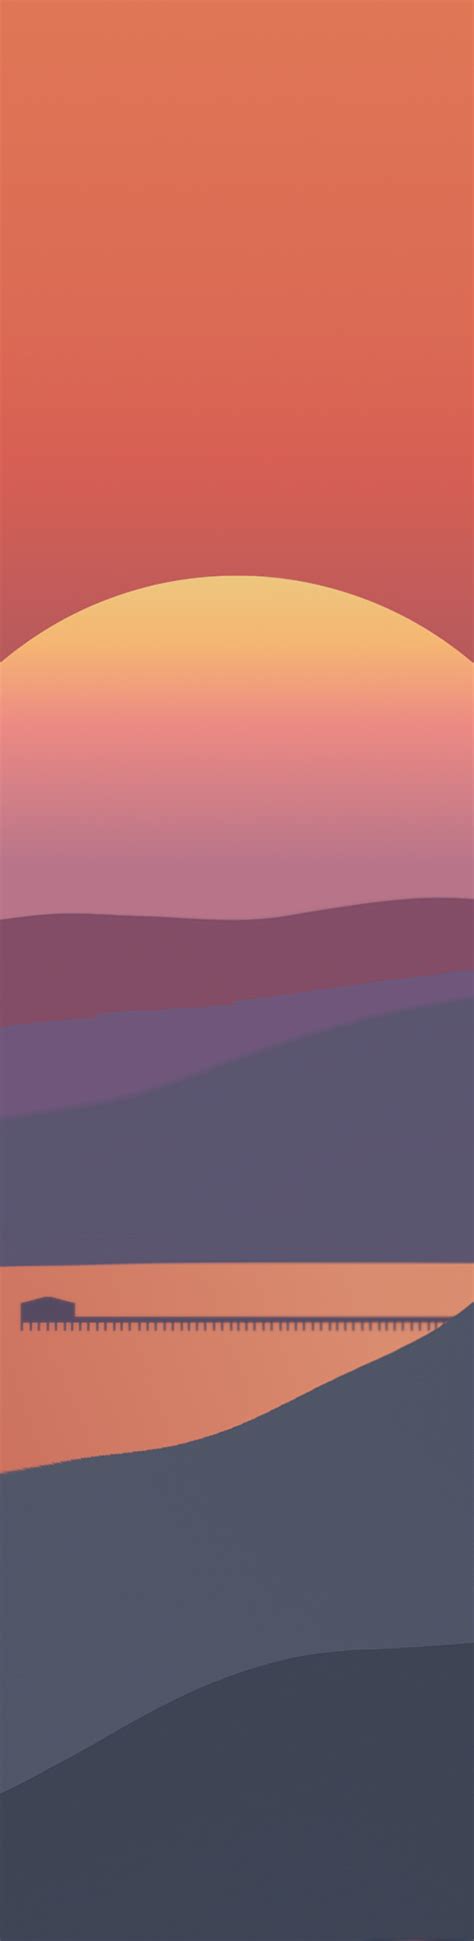 500x2048 Surreal Sunset Minimal 4k 500x2048 Resolution Wallpaper Hd